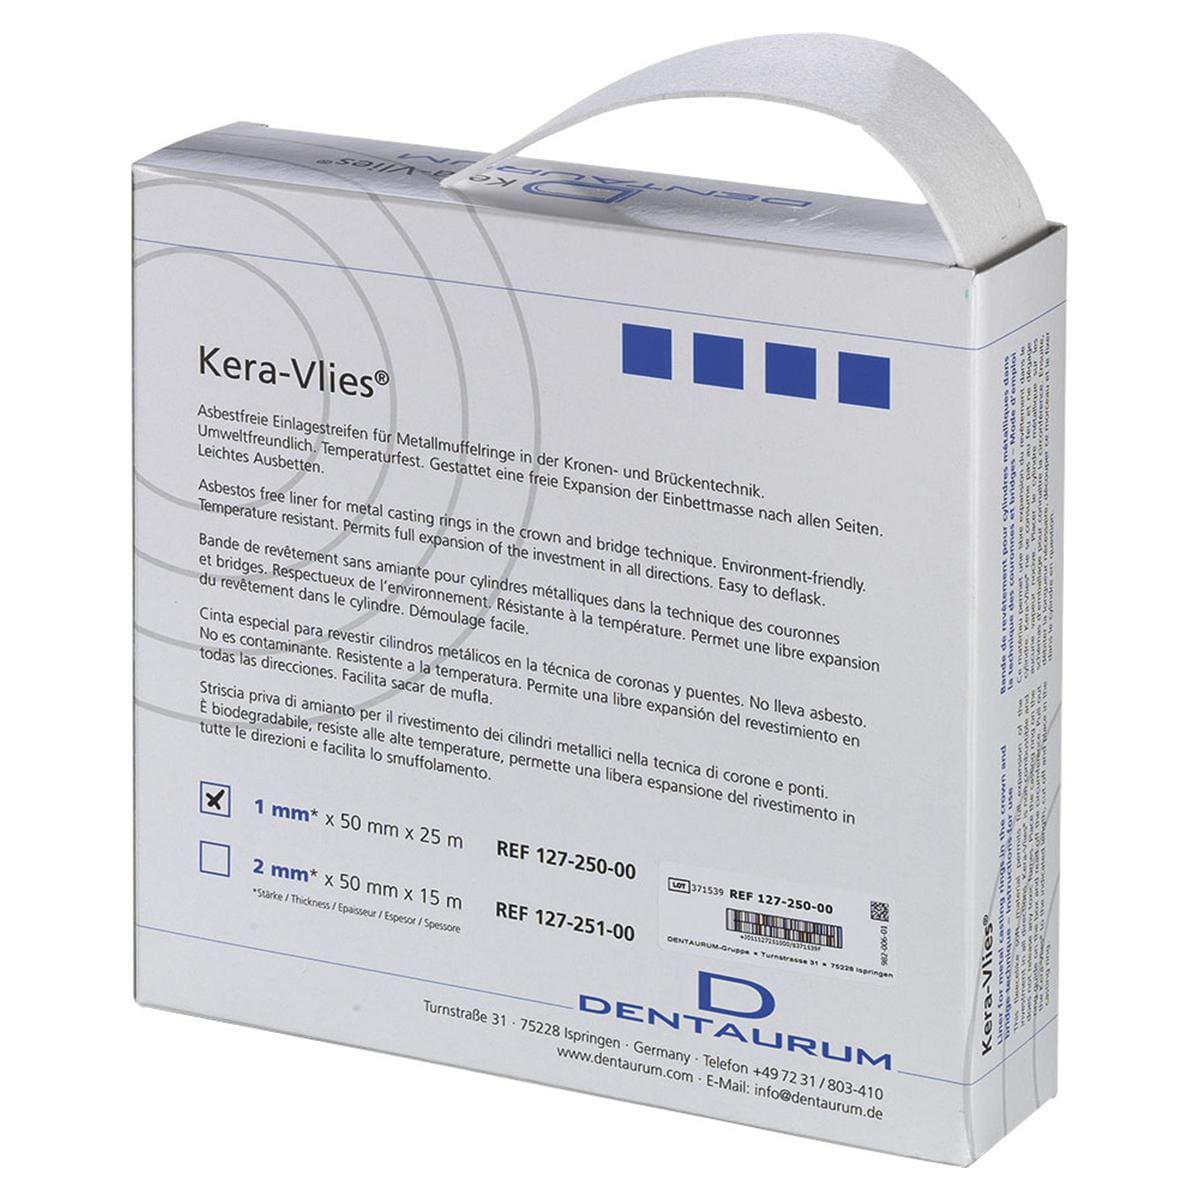 Kera-Vlies® - Größe 2 x 50 mm, Packung 15 m